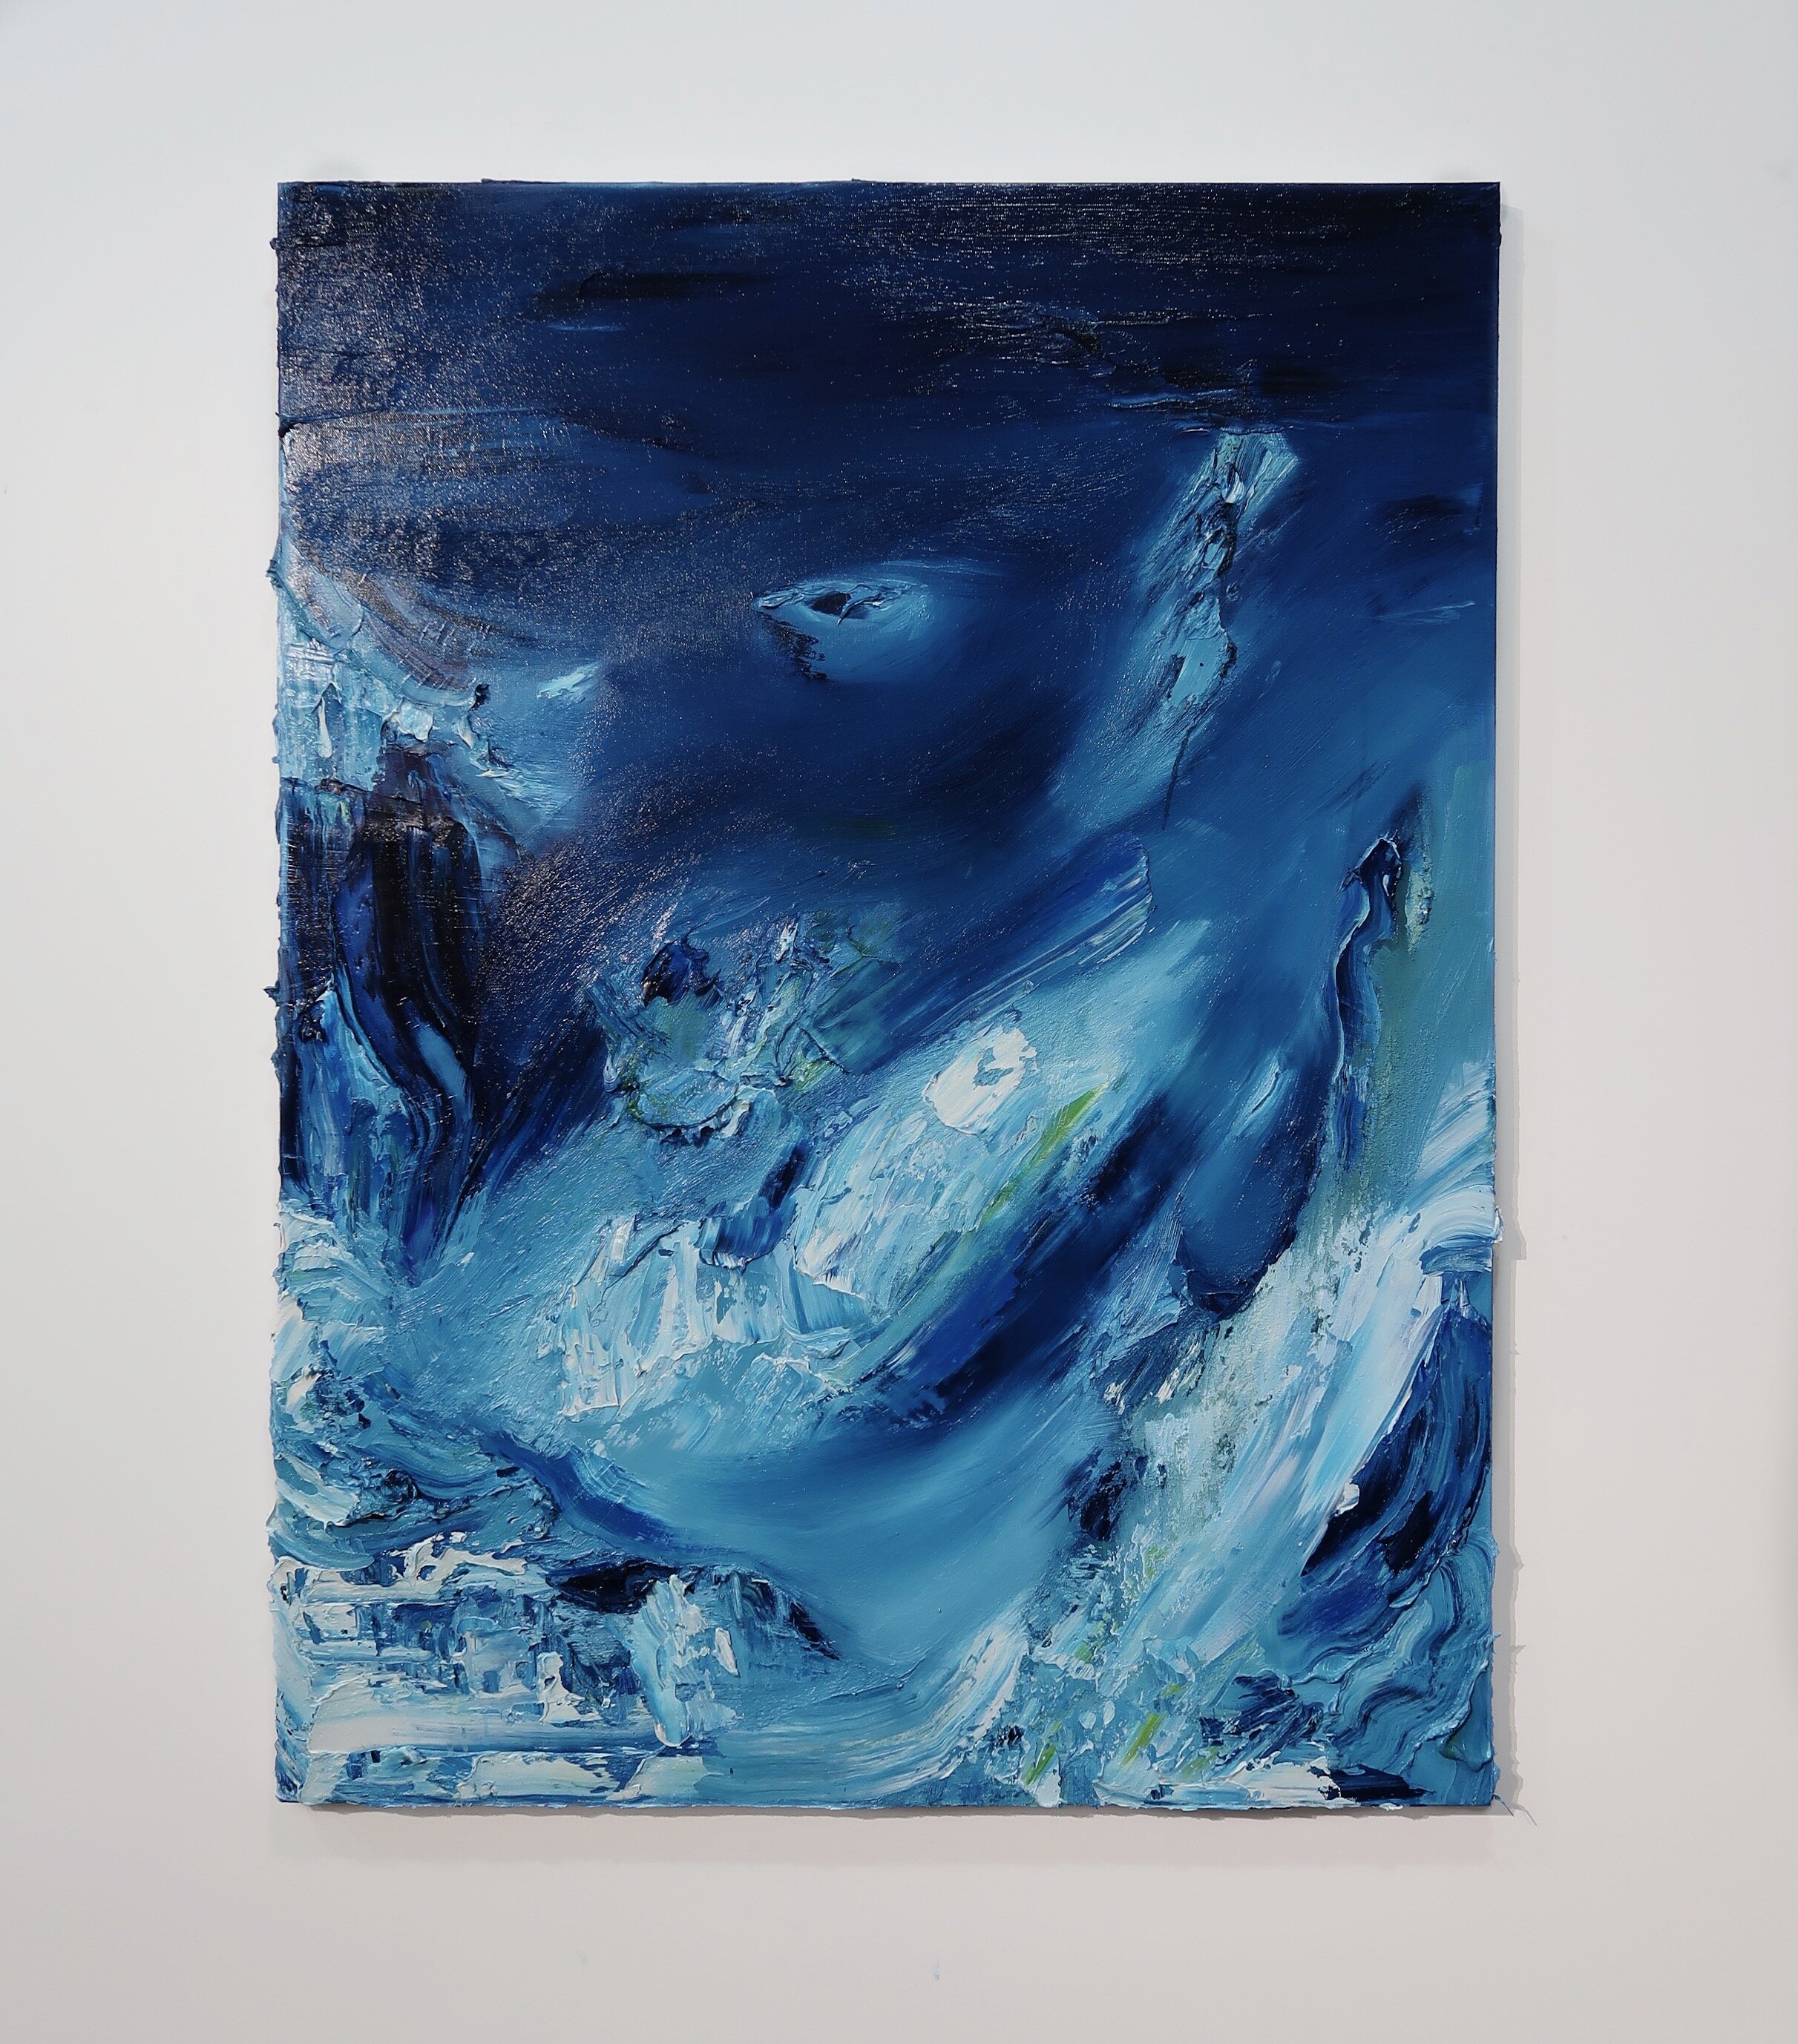  Oil on canvas   36x48”  2019 